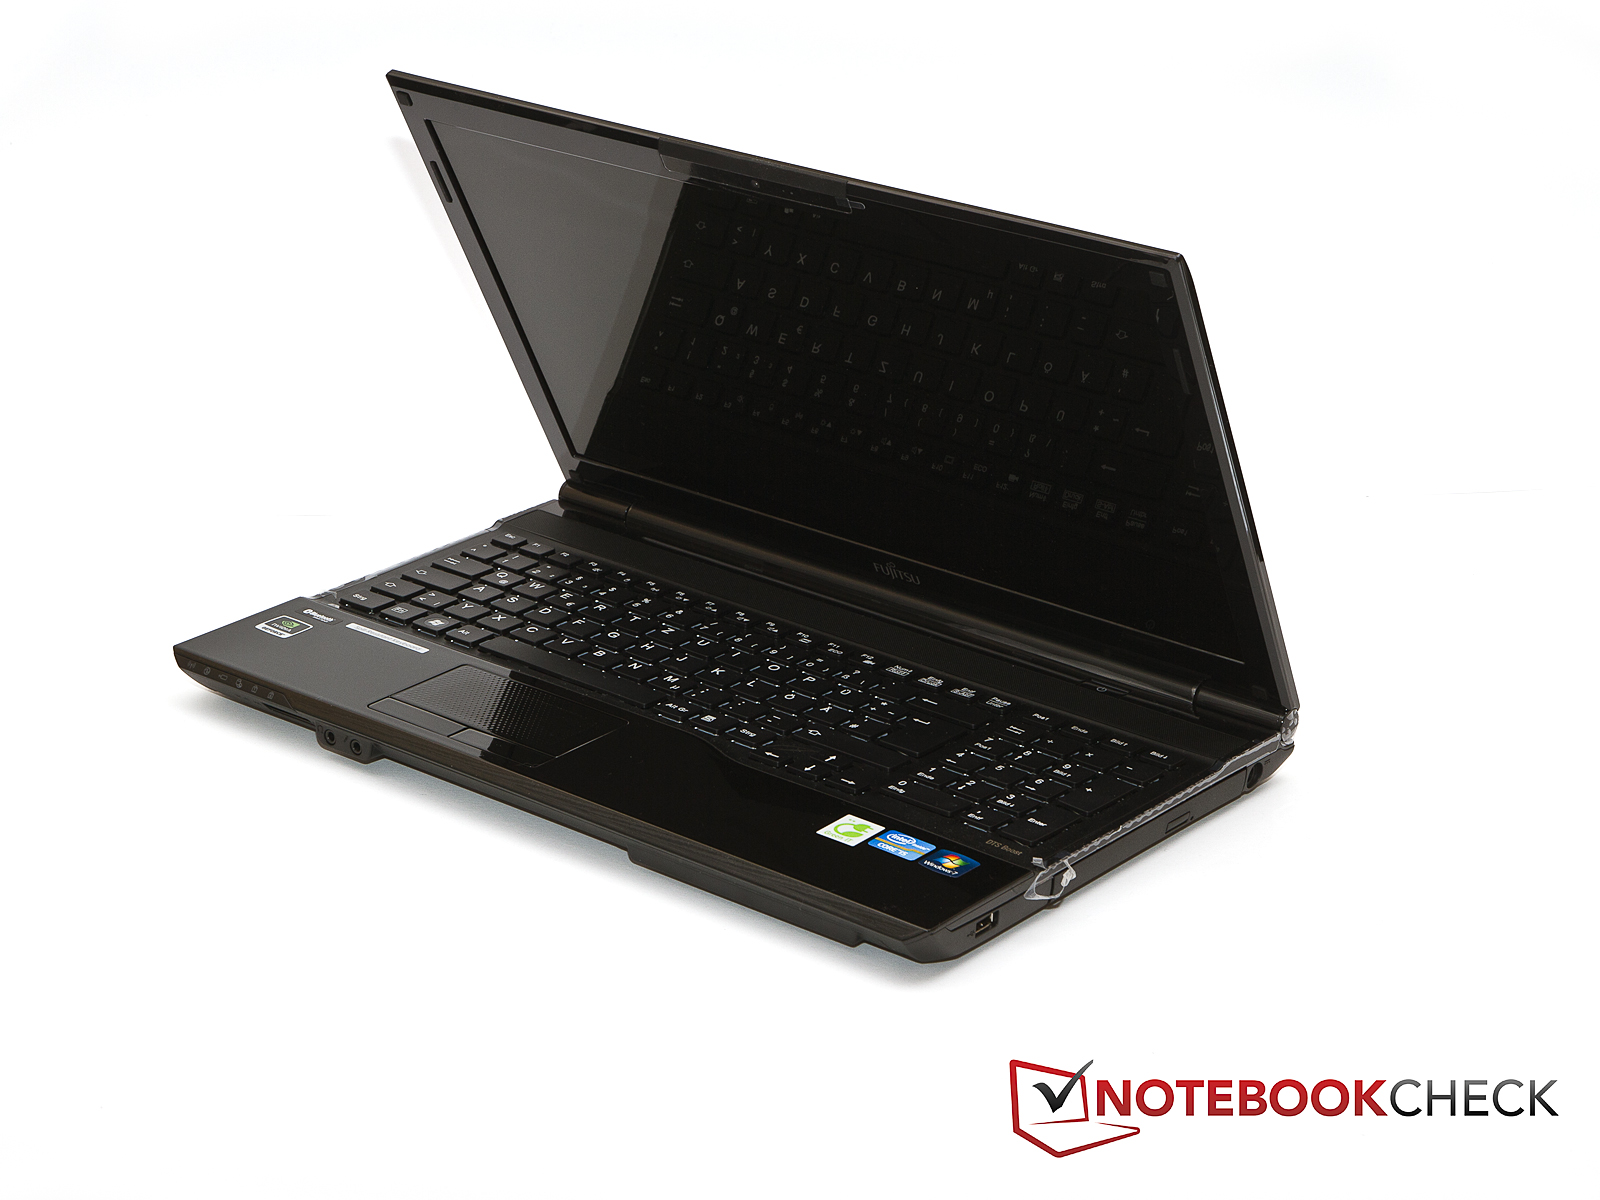 Disco rigido notebook/HDD FUJITSU LIFEBOOK ah532 serie 2,5" 750 GB SATA II 